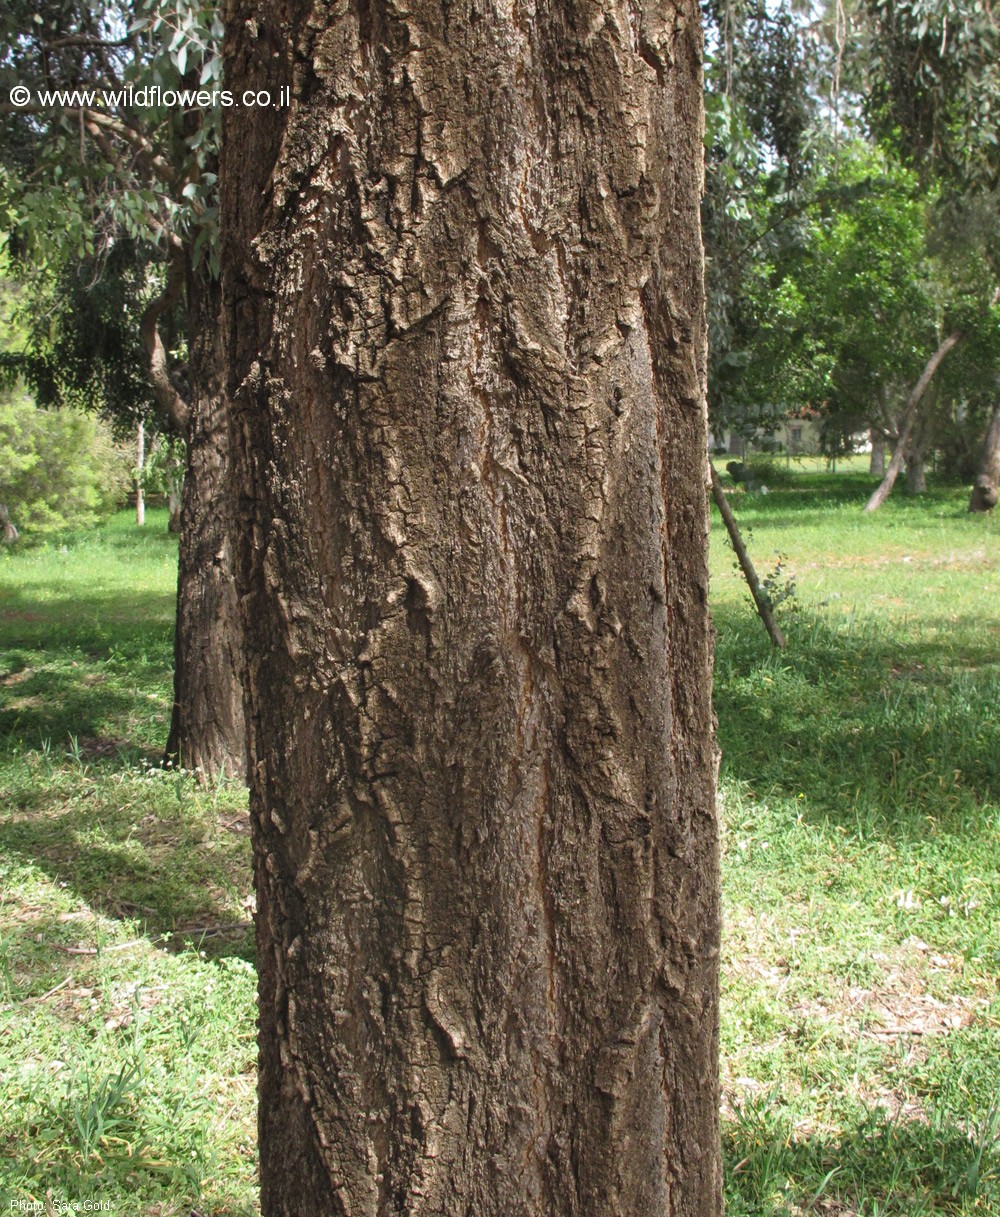 Eucalyptus melanophloia